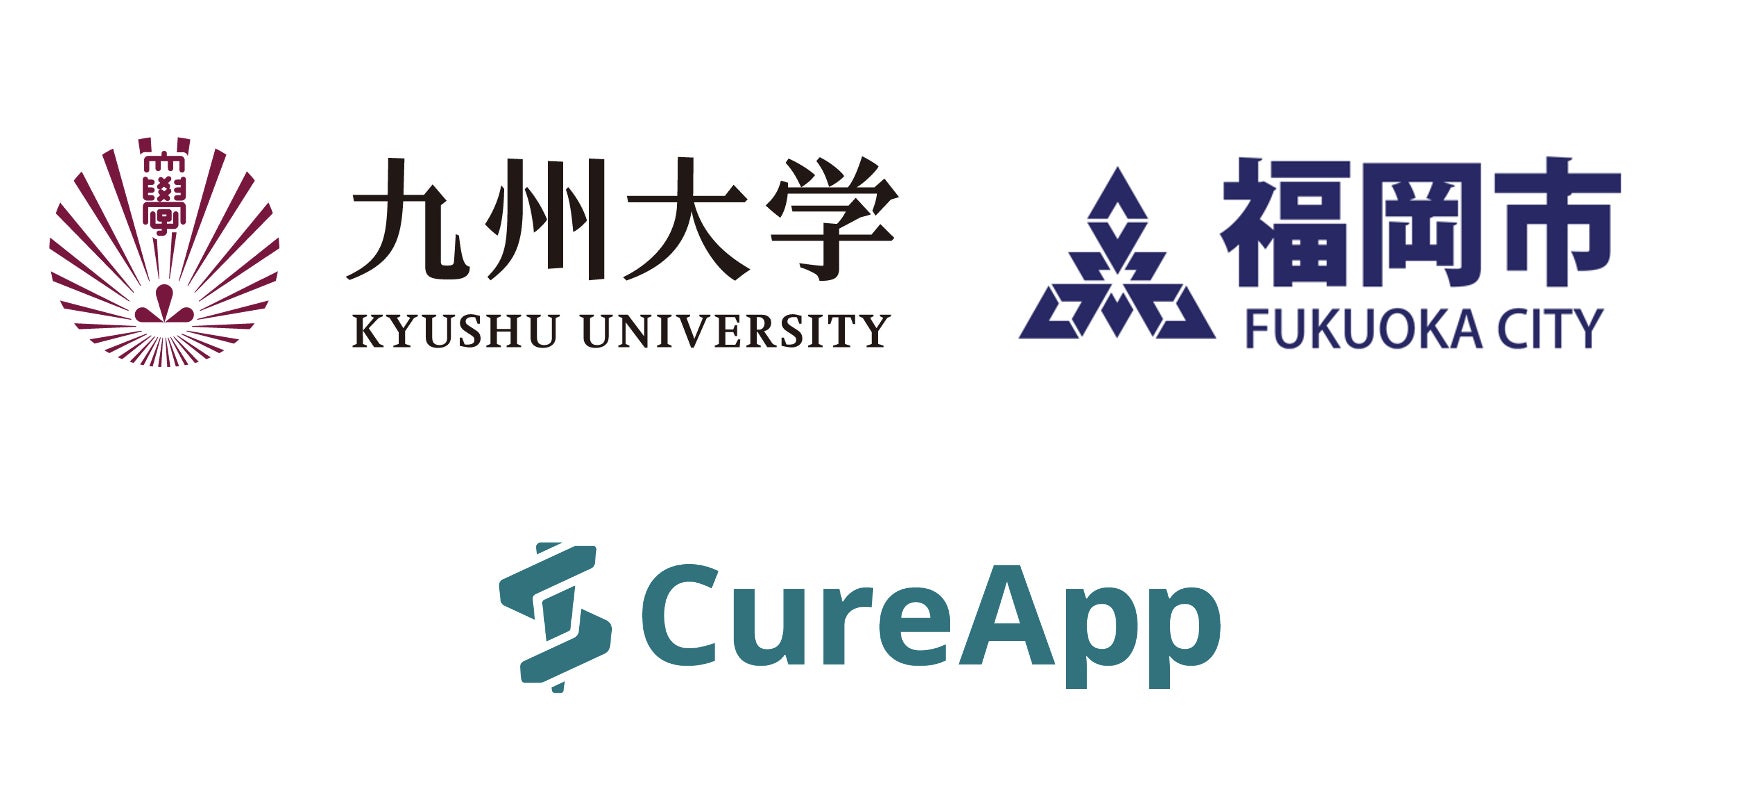 CureApp 福岡市実施の「学生と共創するSDGsワーケーション」に参加のサブ画像2